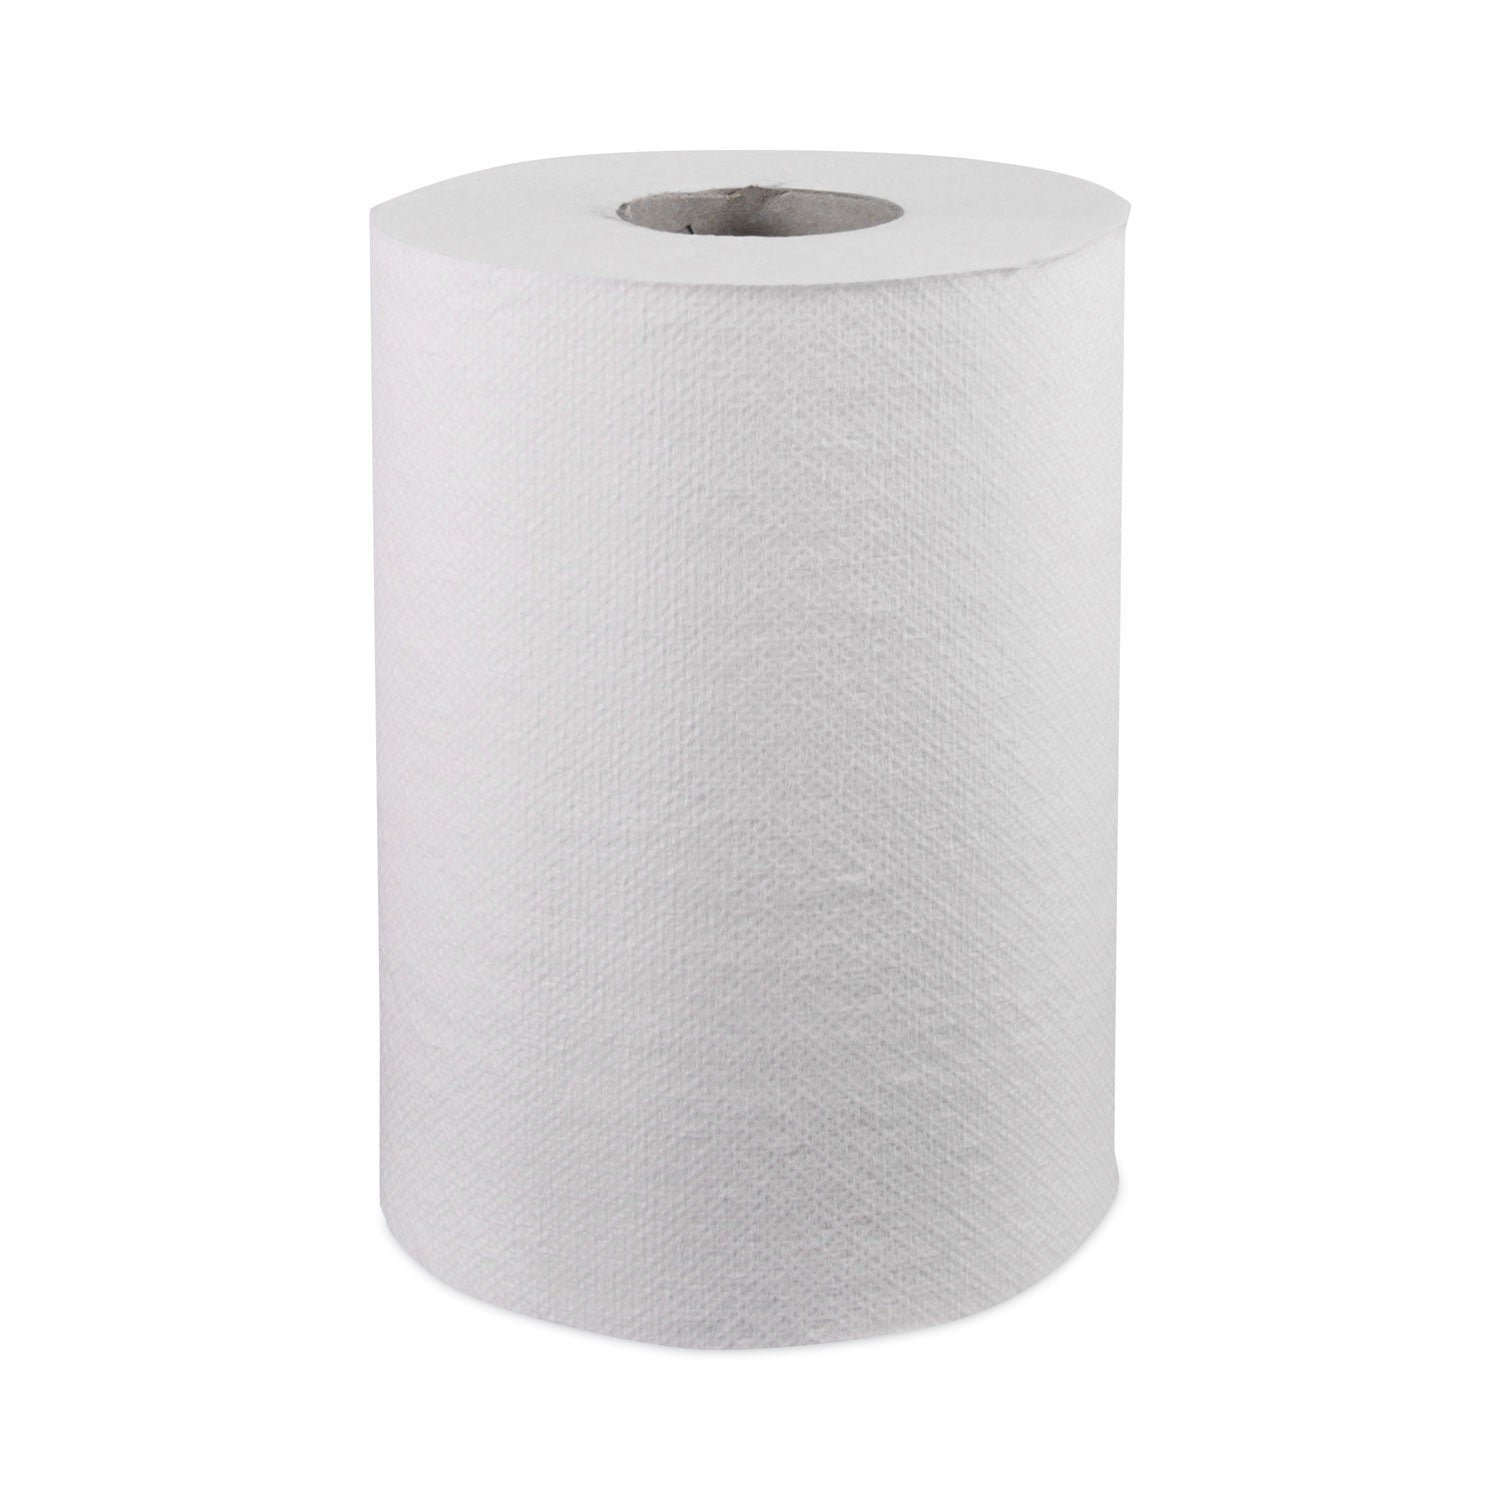 hardwound-roll-towels-1-ply-8-x-350-ft-white-12-rolls-carton_win109b - 1